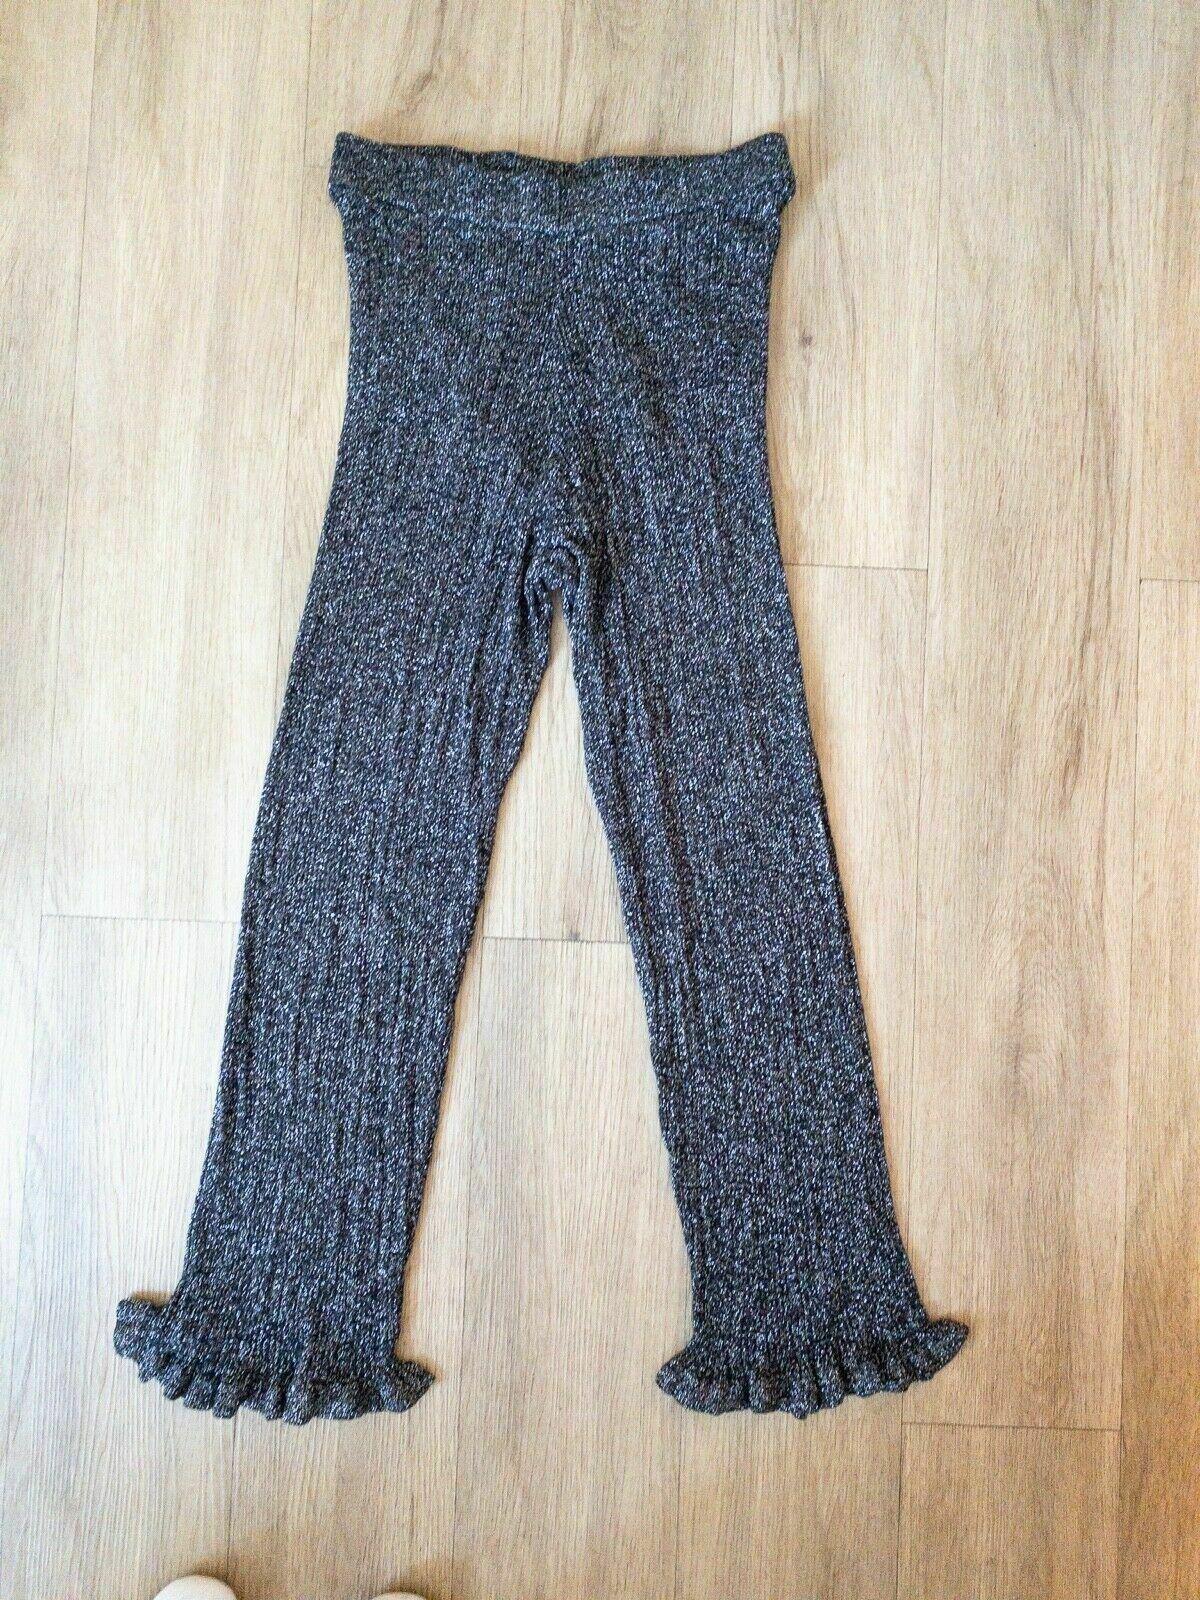 River Island Knit Crop Trousers Frill Hems Sizes 6, 8, 12 Black Silver Metallic